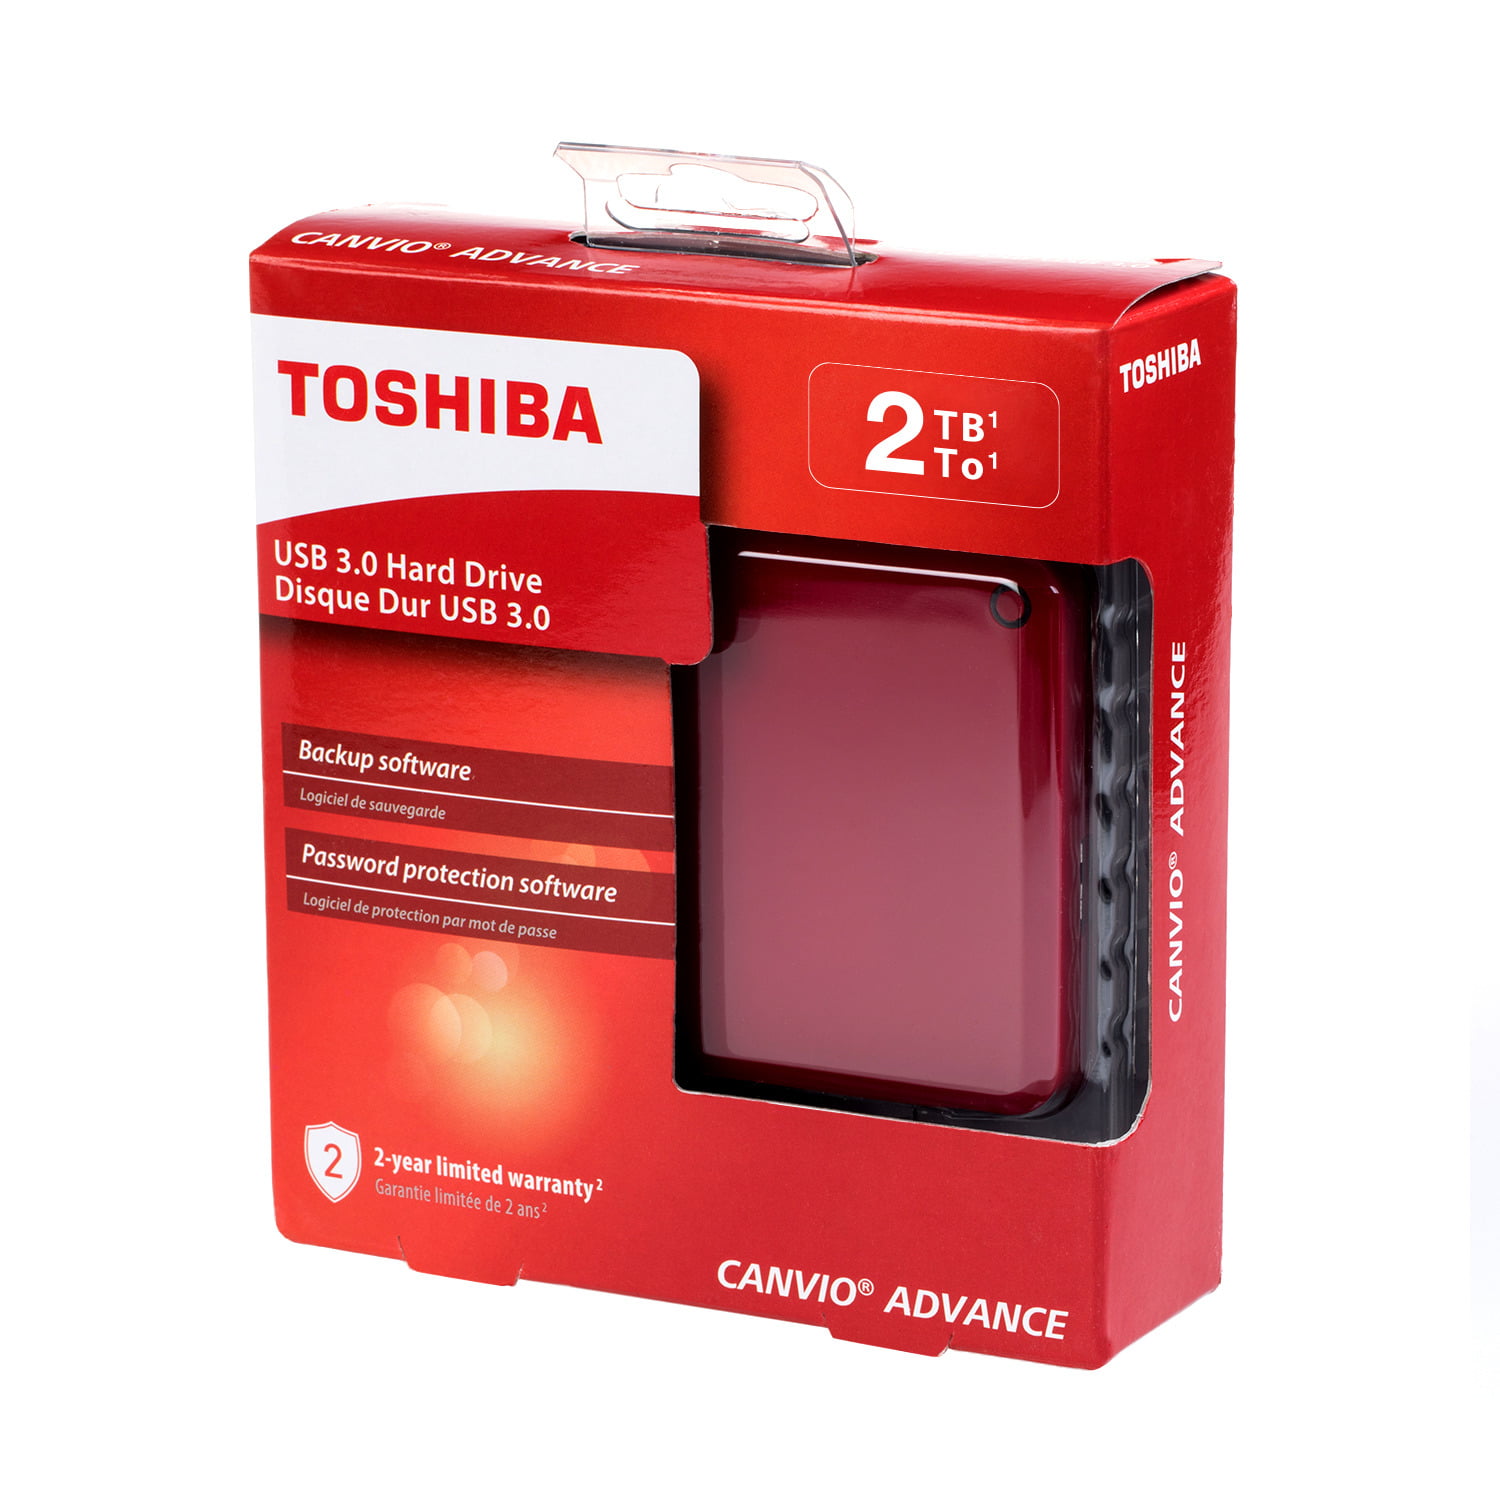 Toshiba HDTC920EW3AA Canvio Advance Tragbare Externe Festplatte USB 3.0 2TB Weiß 